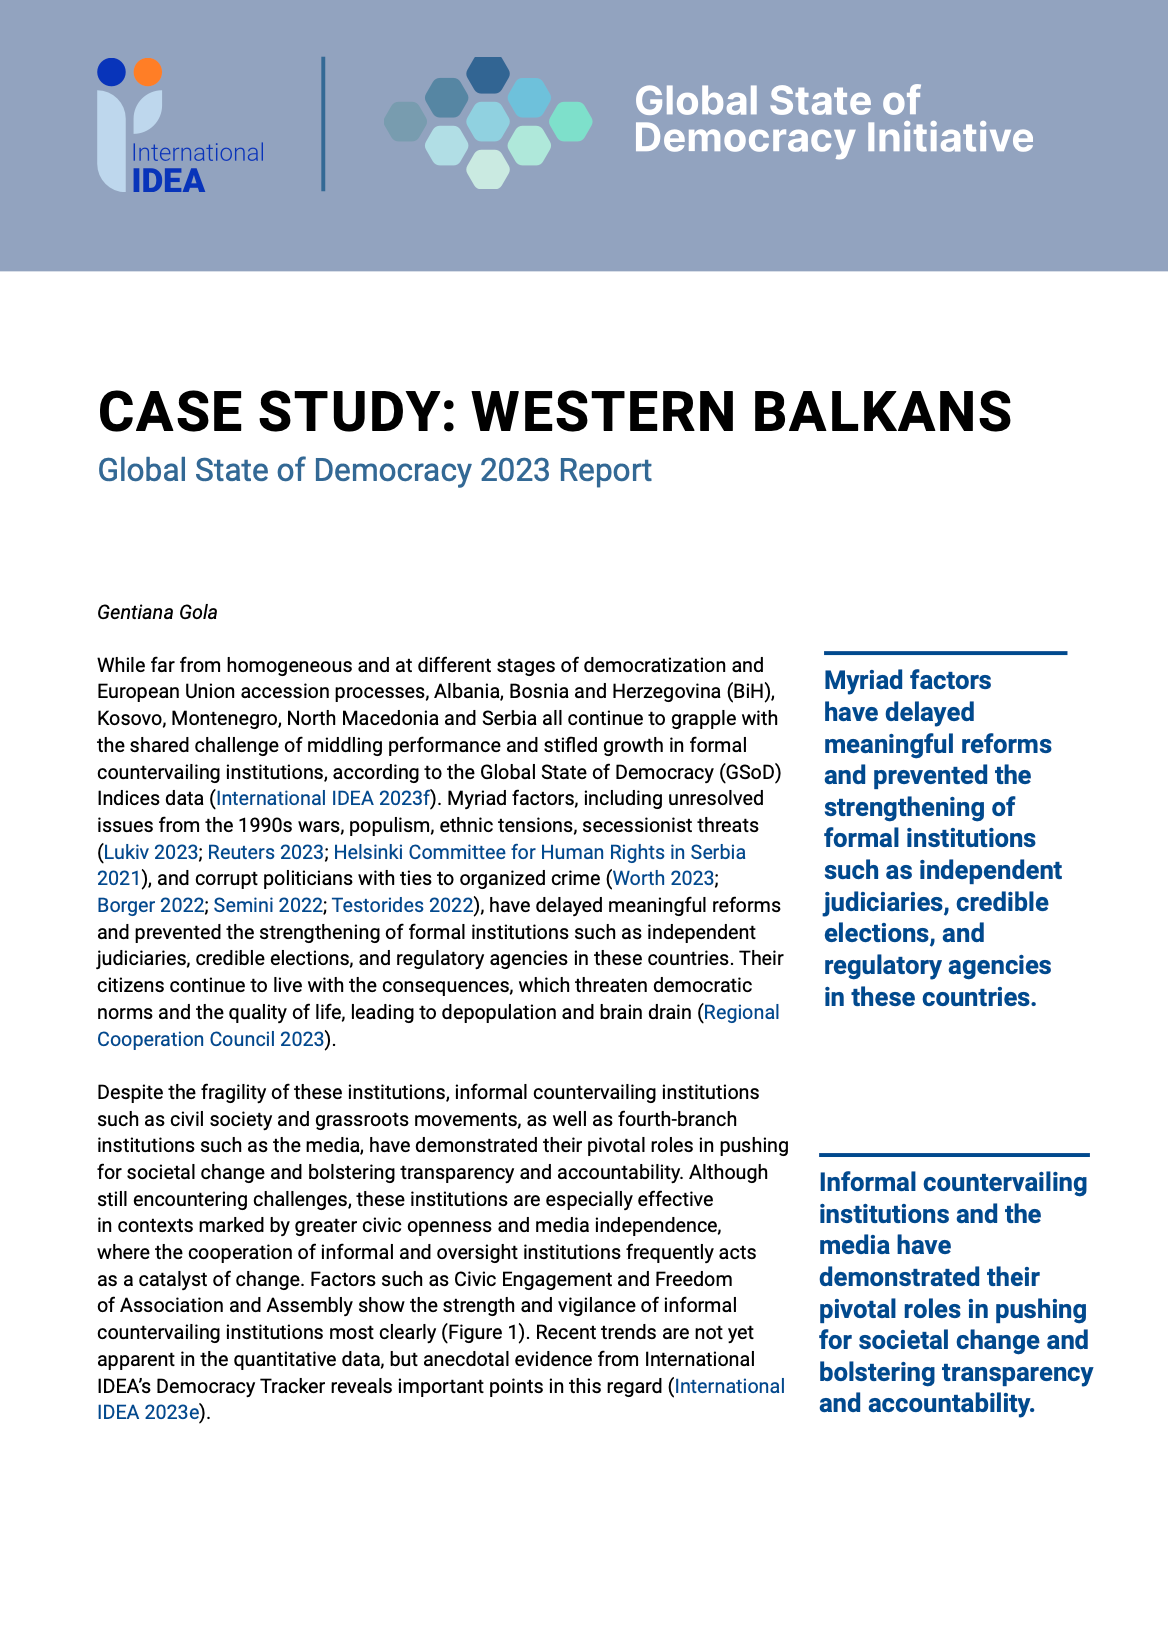 Western Balkans Case Study